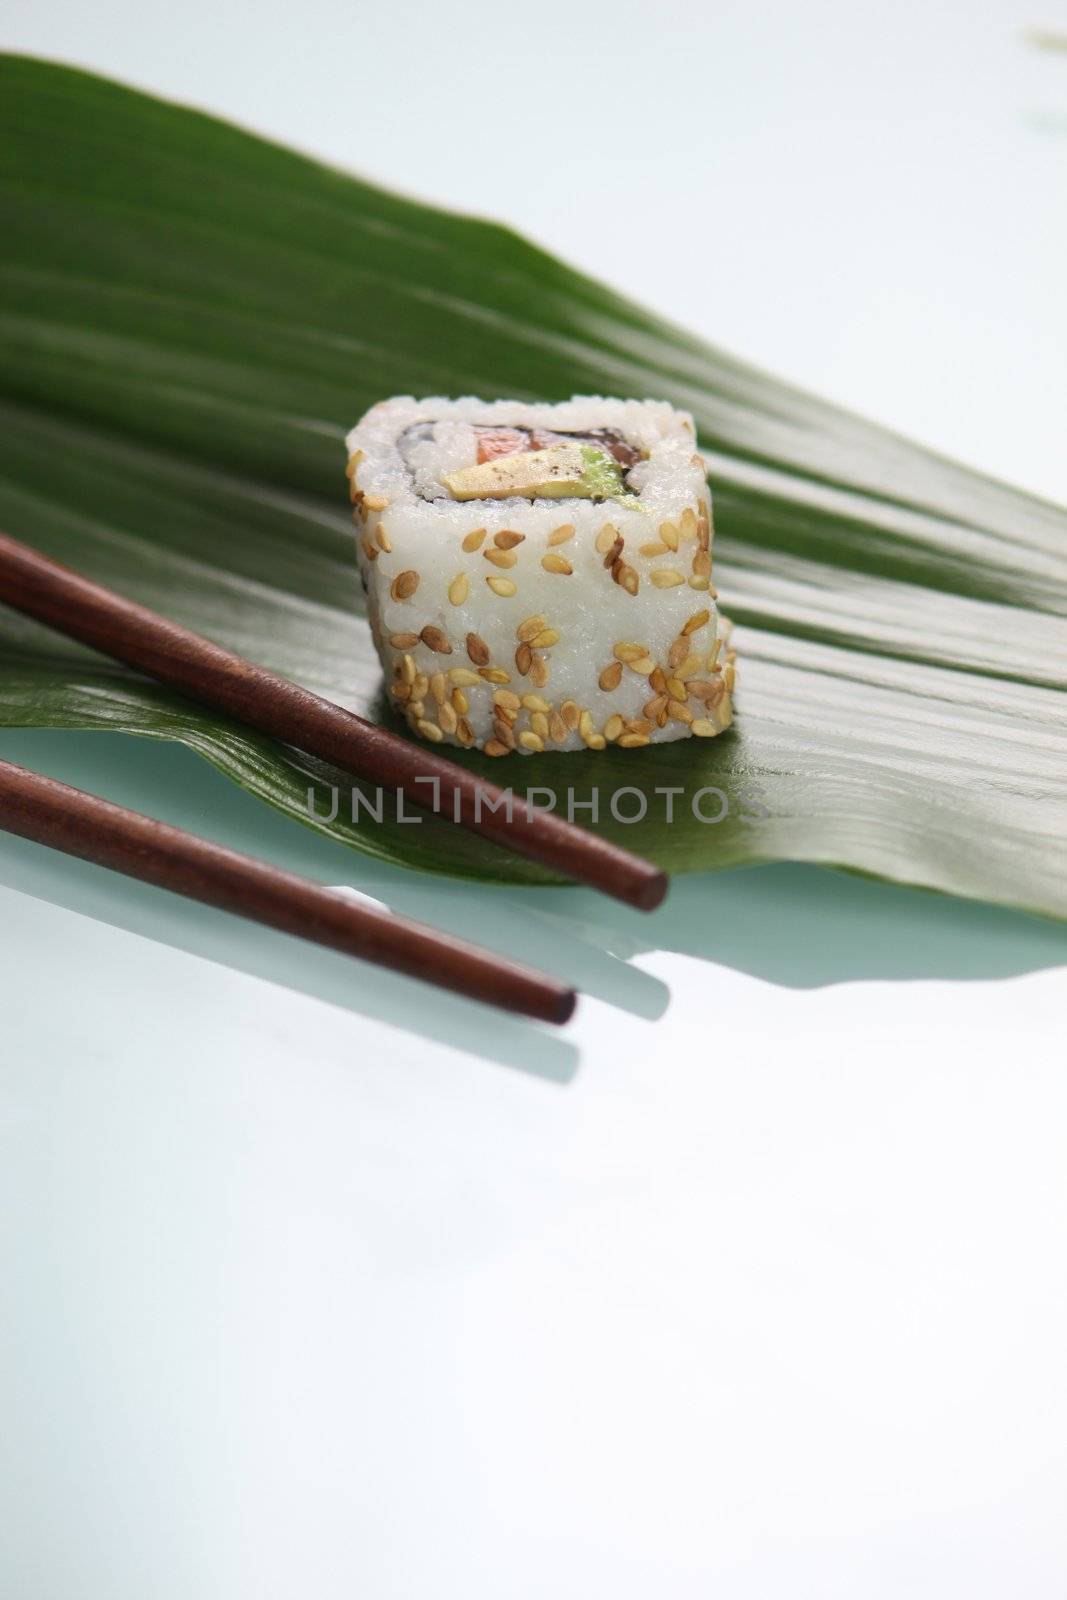 Single sushi resting on green leaf by phovoir